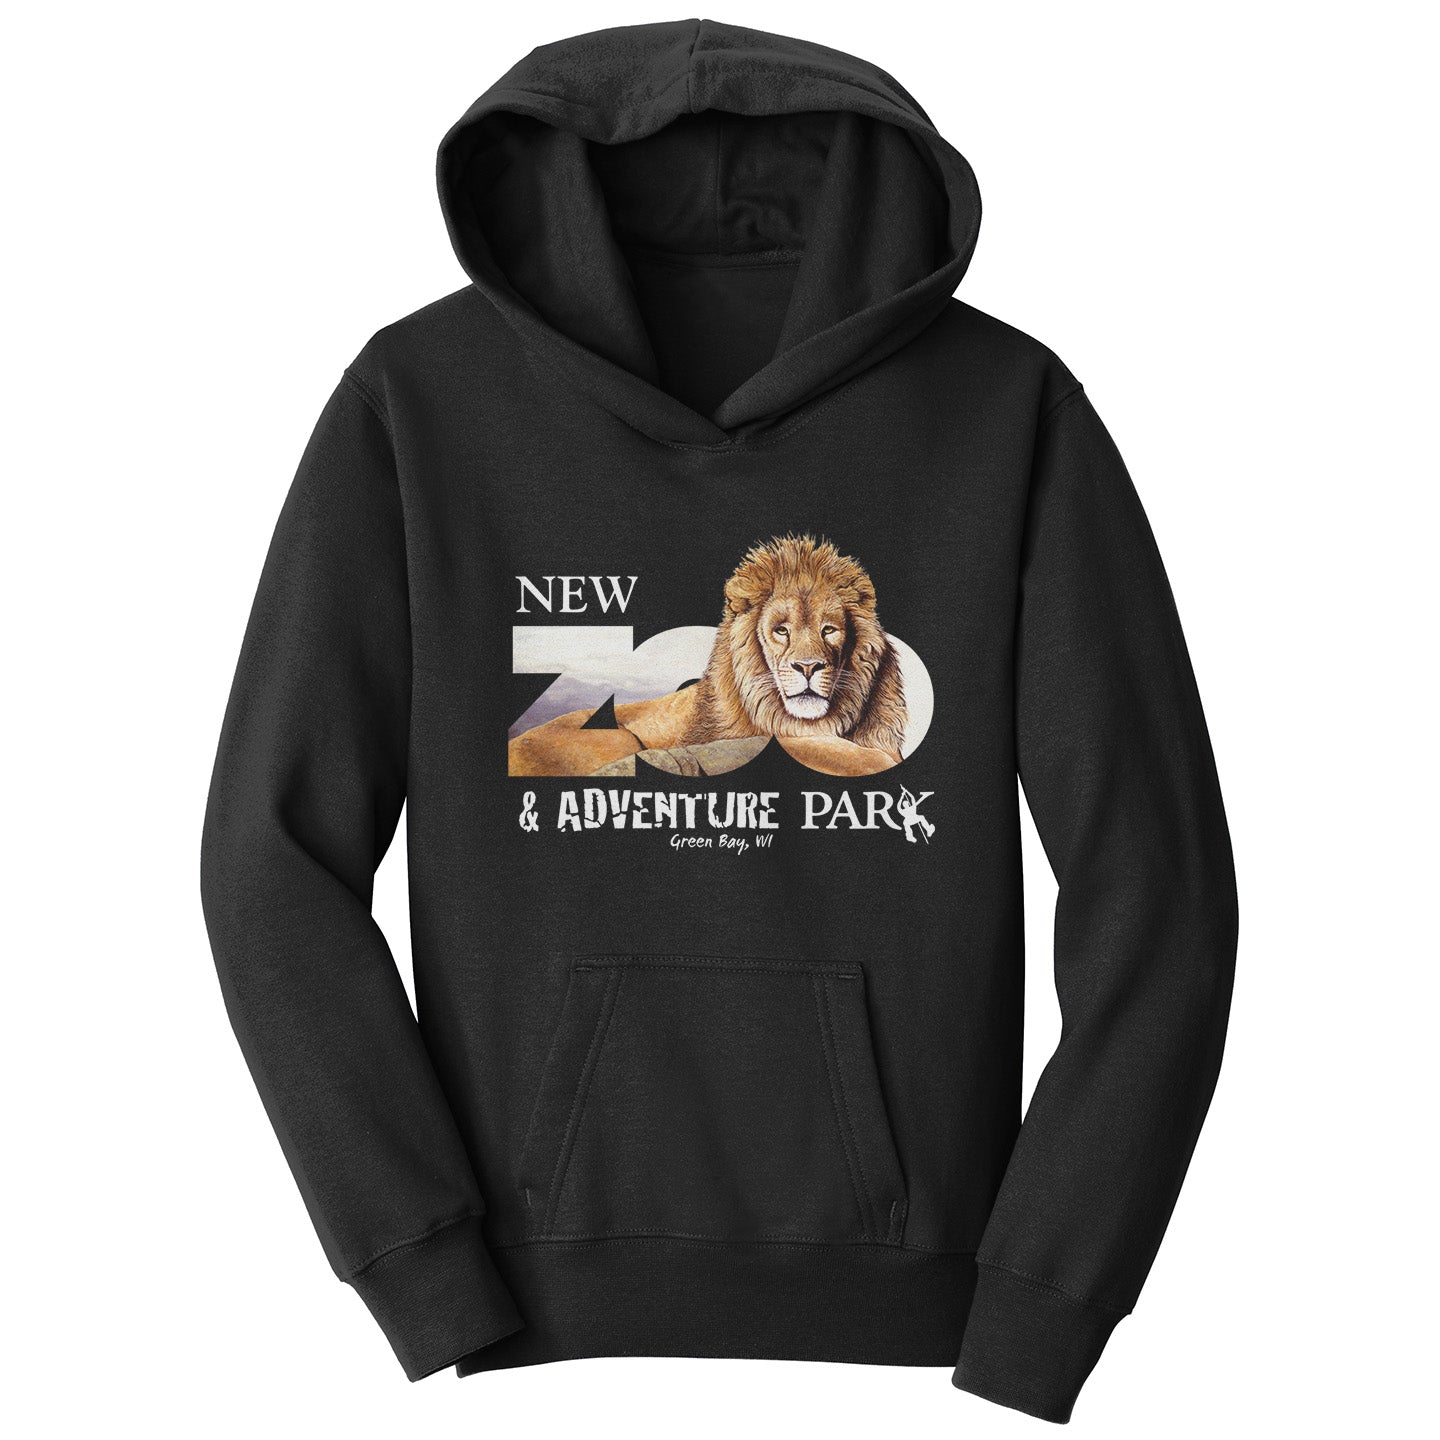 NEW Zoo Lion Logo - Kids' Unisex Hoodie Sweatshirt